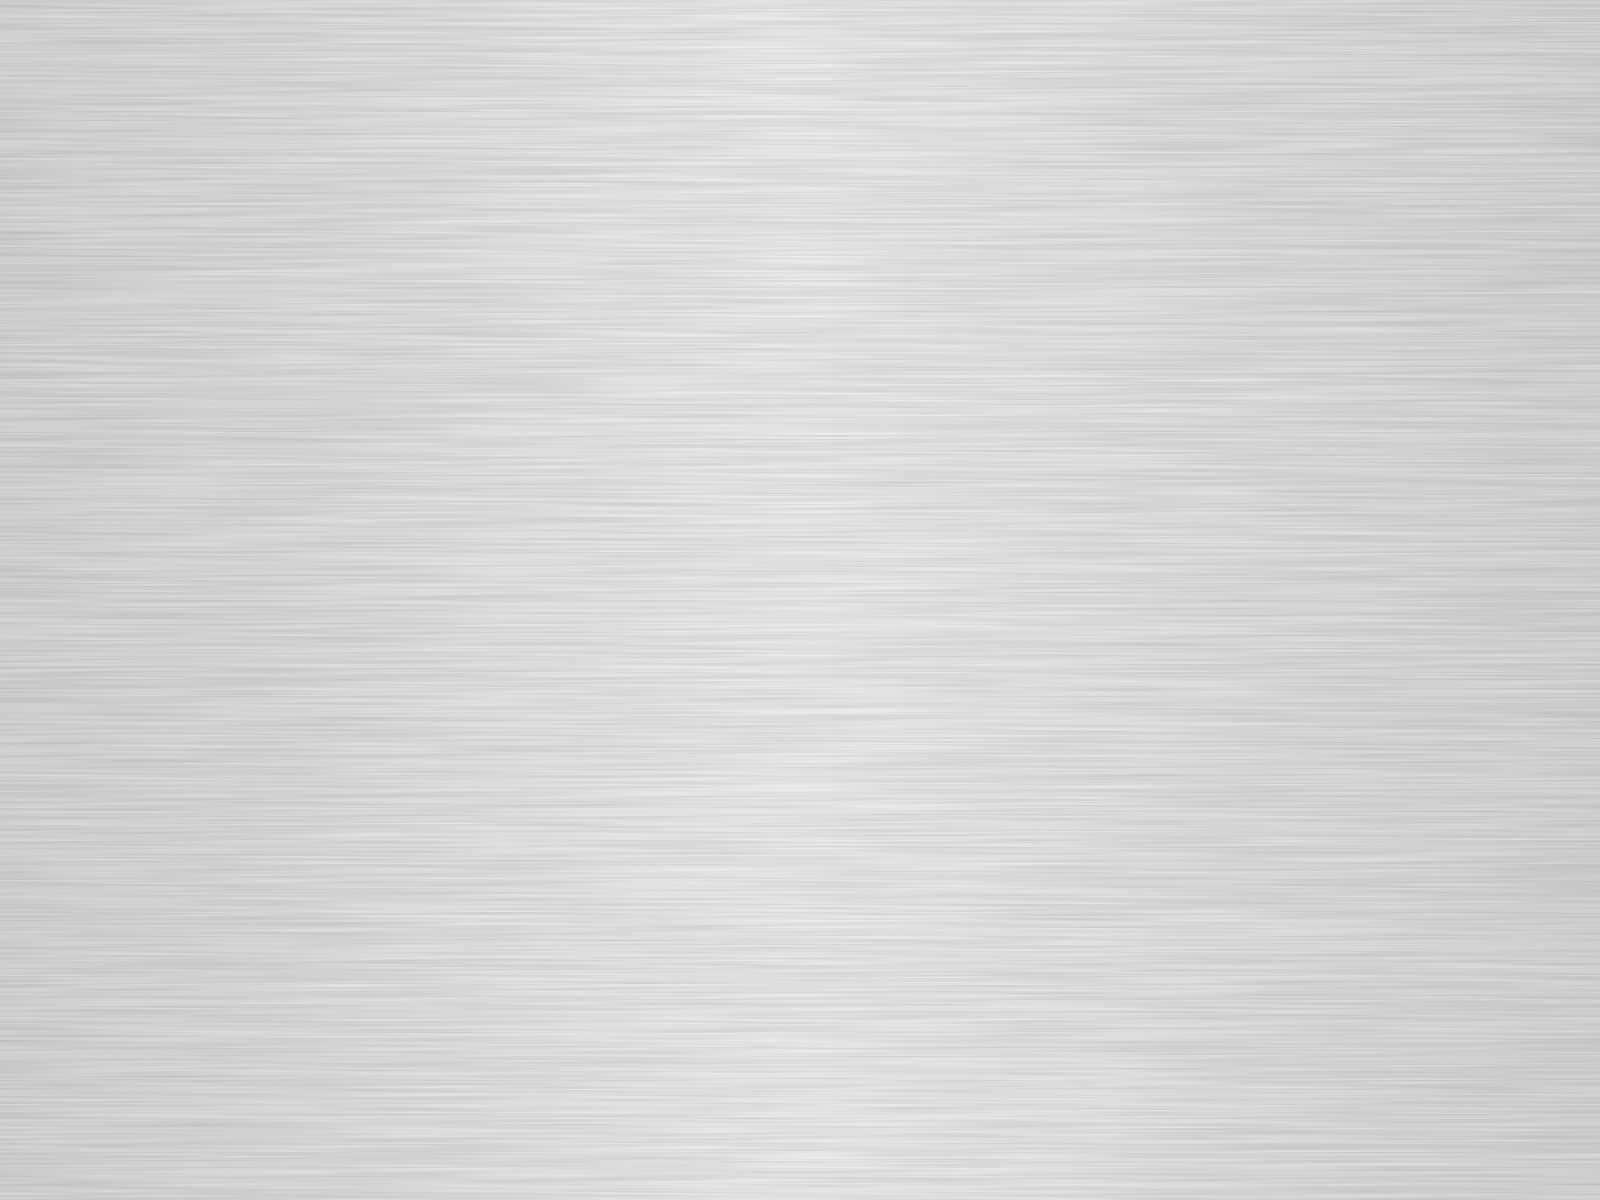 Metallic Silver Background Plain Horizontal Pattern